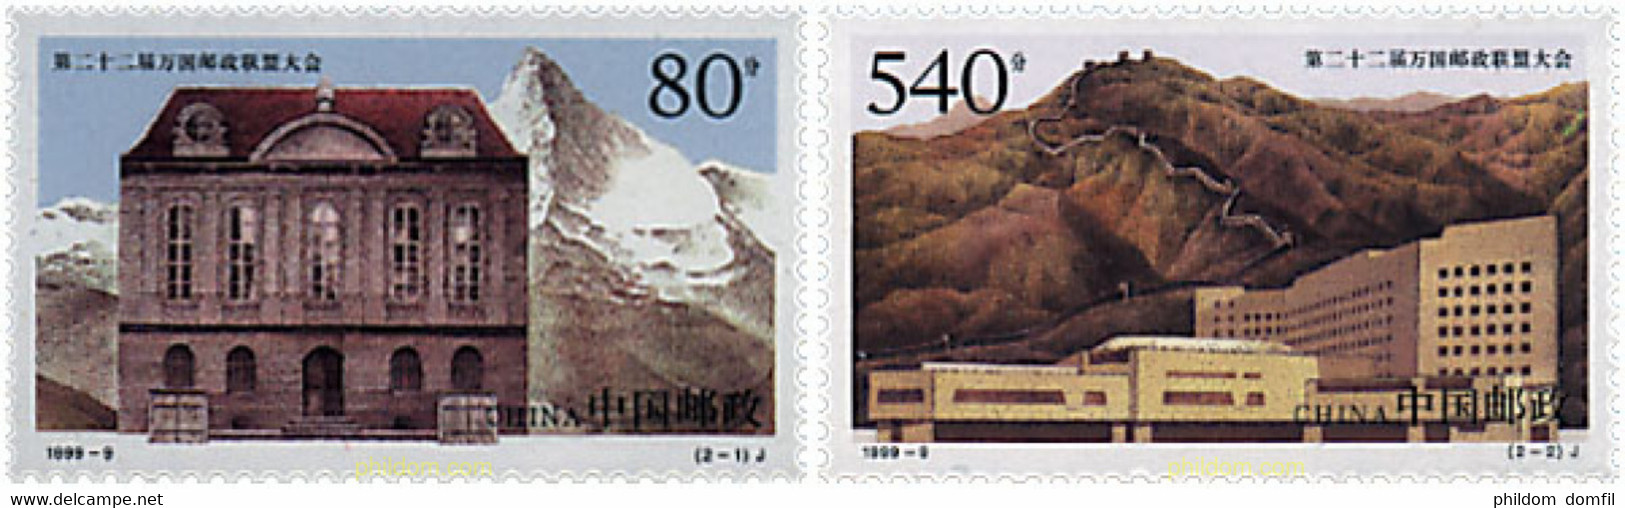 74874 MNH CHINA. República Popular 1999 125 ANIVERSARIO DE LA UPU - Luftpost